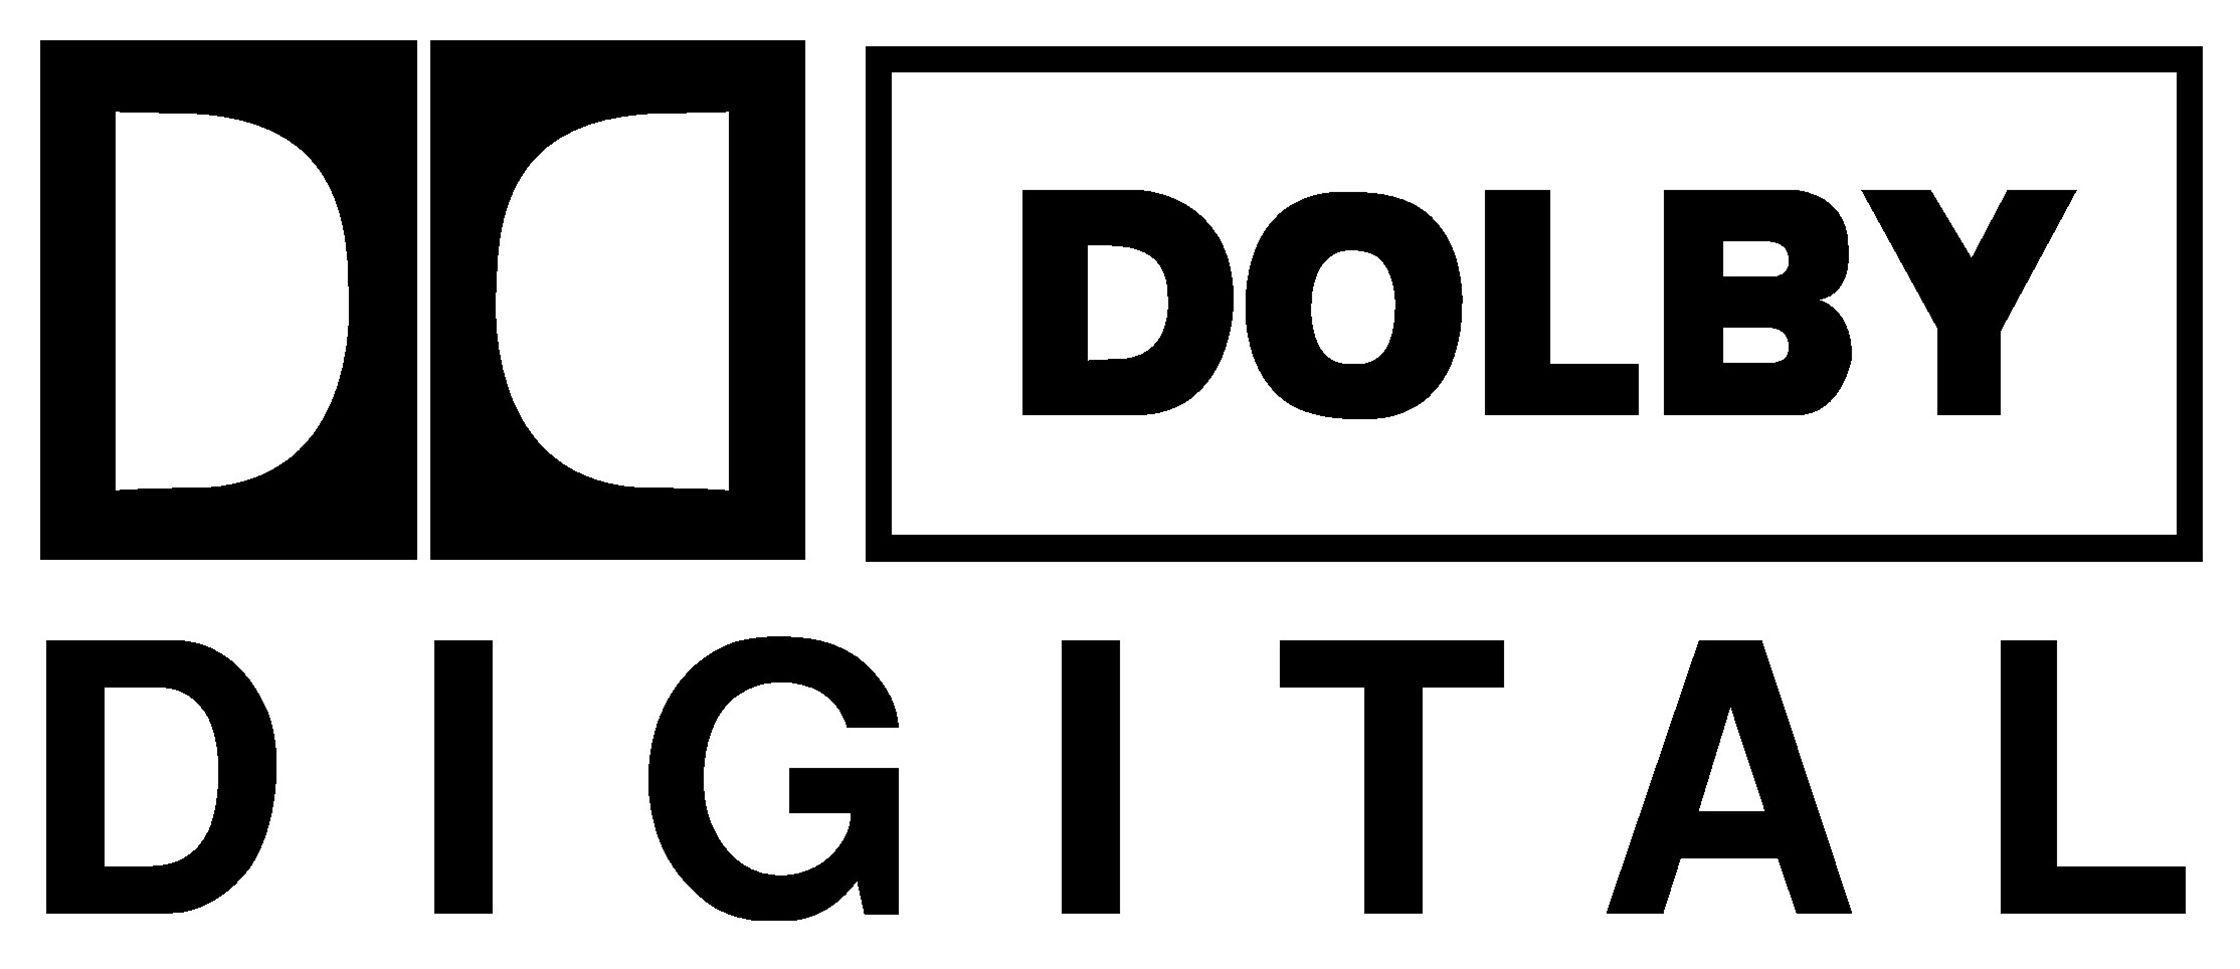 Dolby Digital Logo - DOLBY DIGITAL LOGO - Pesquisa Google | RCA Photophone/Other | Logos ...